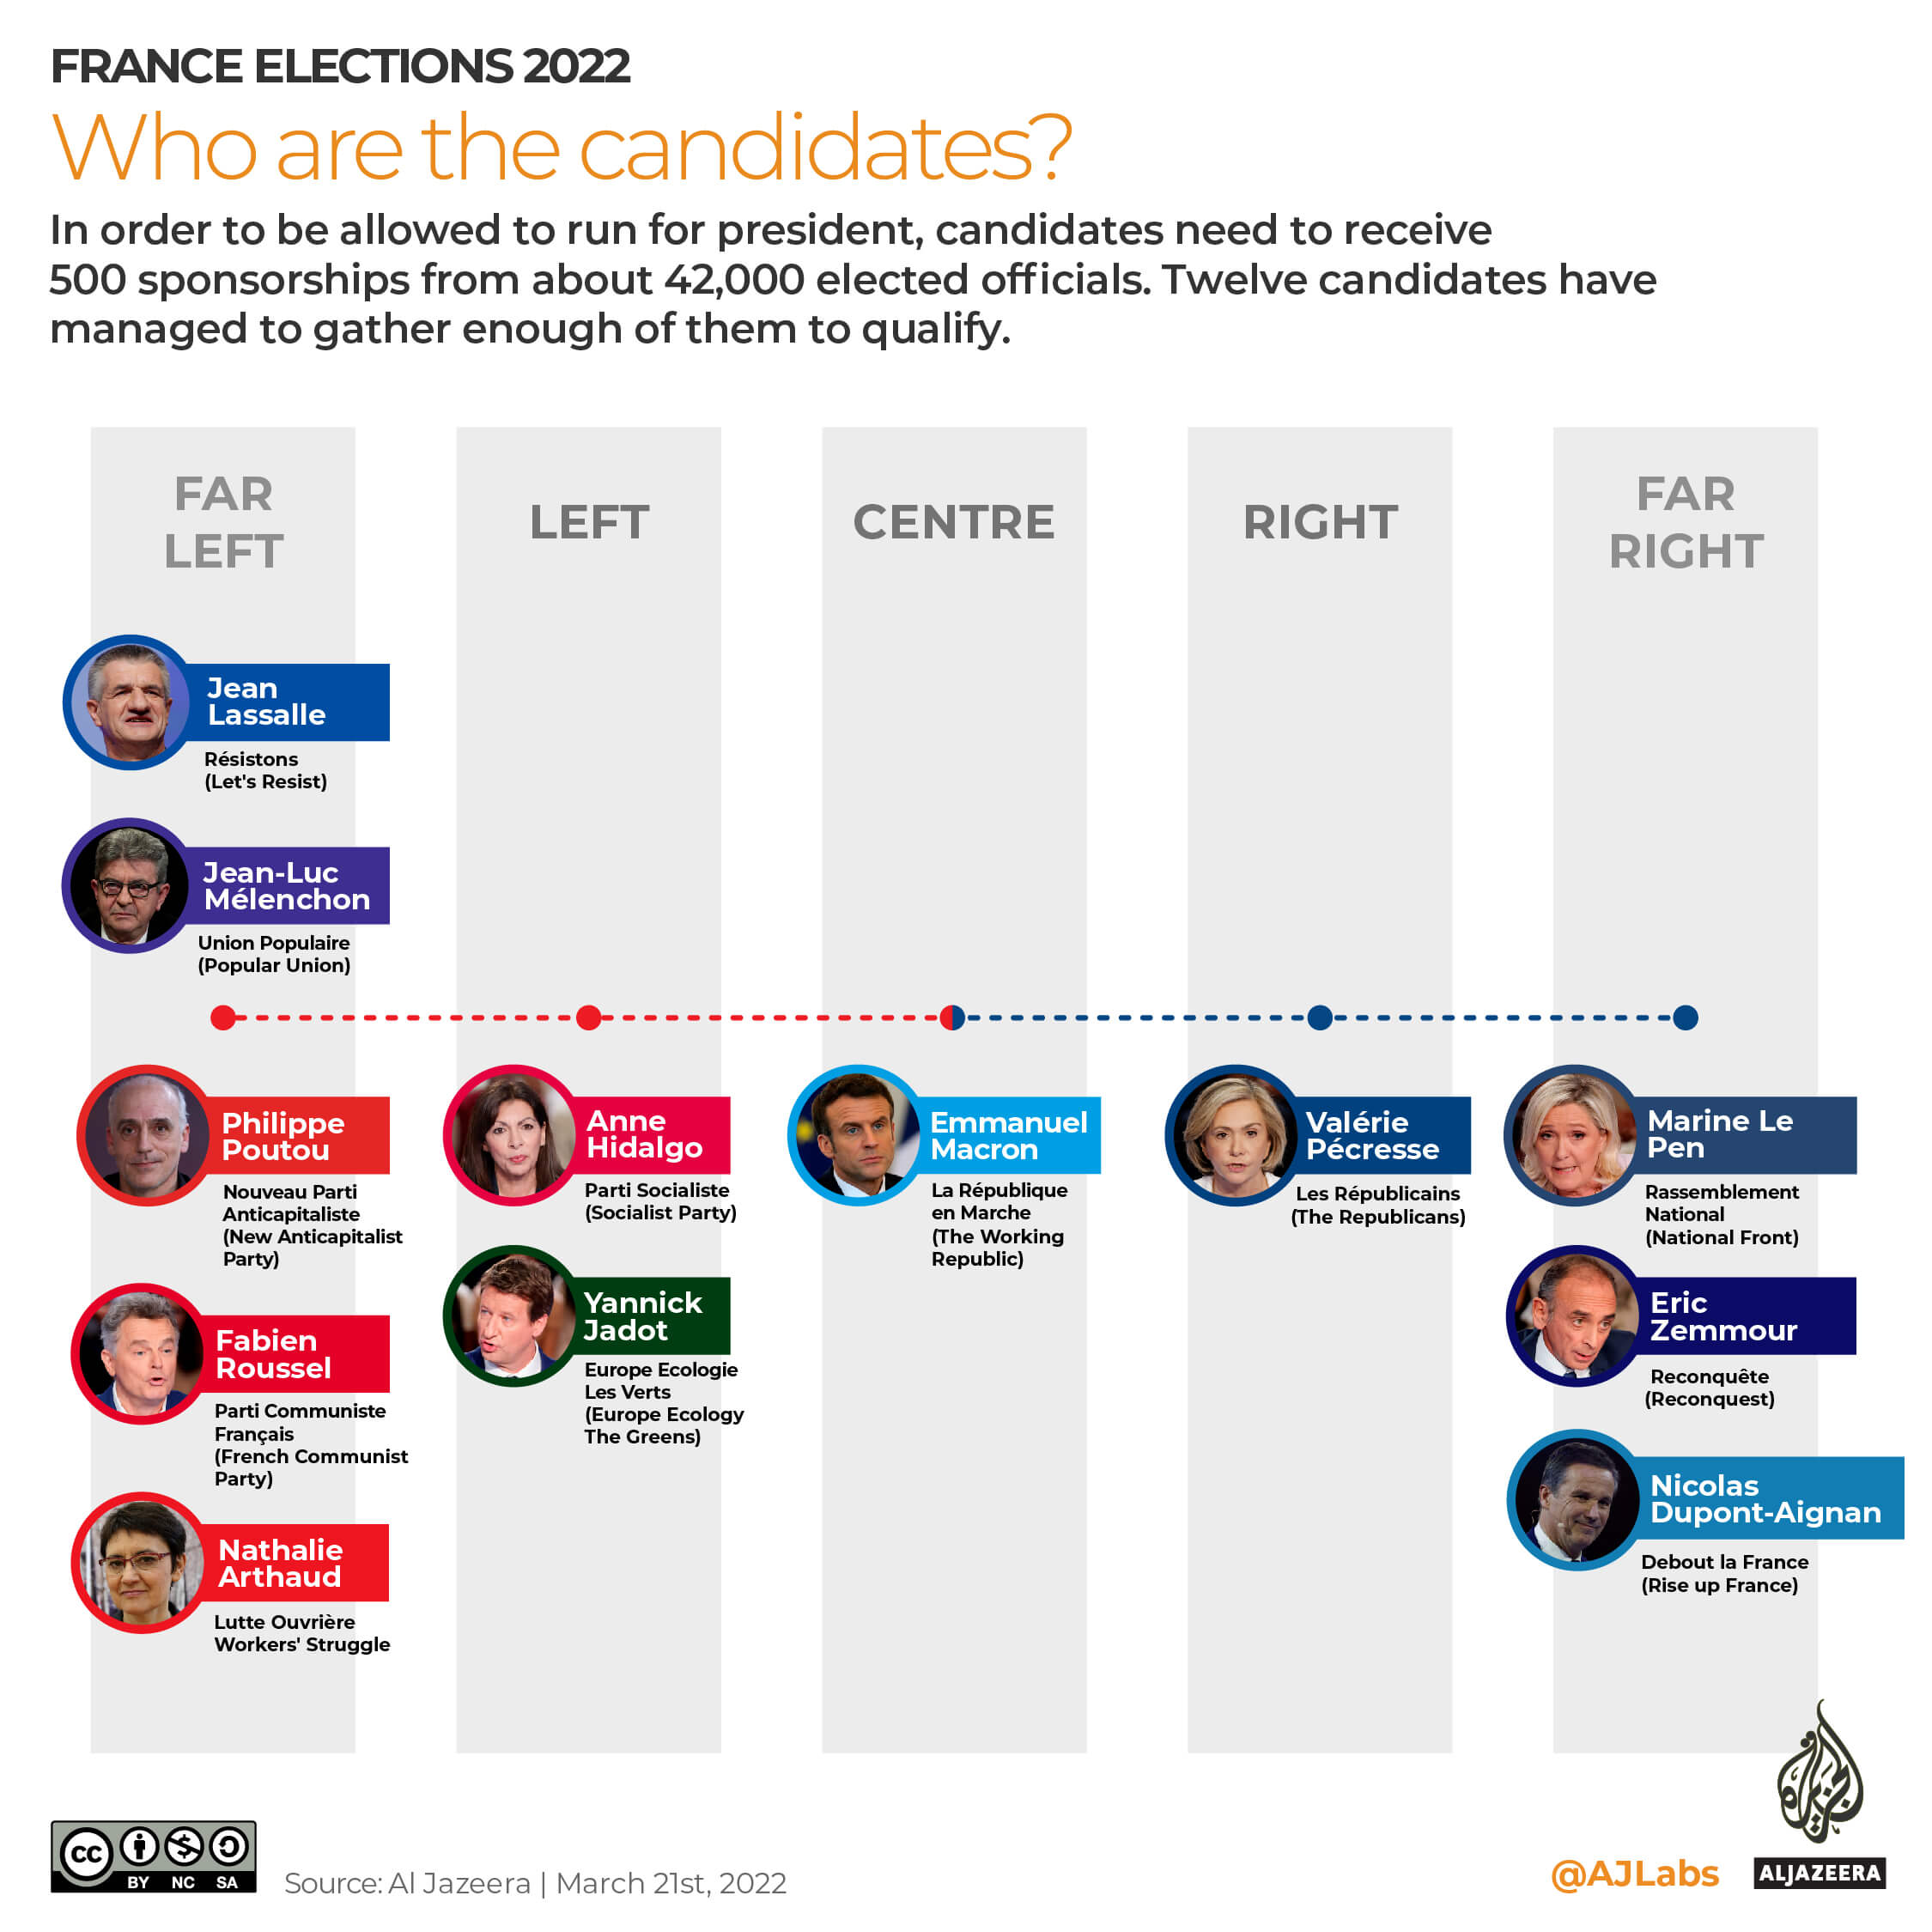 https://www.aljazeera.com/wp-content/uploads/2022/03/Interactive_French-Elections_2022_INTERACTIVE_French_Elections_who_are_the_candidates_21-03-2022.jpg